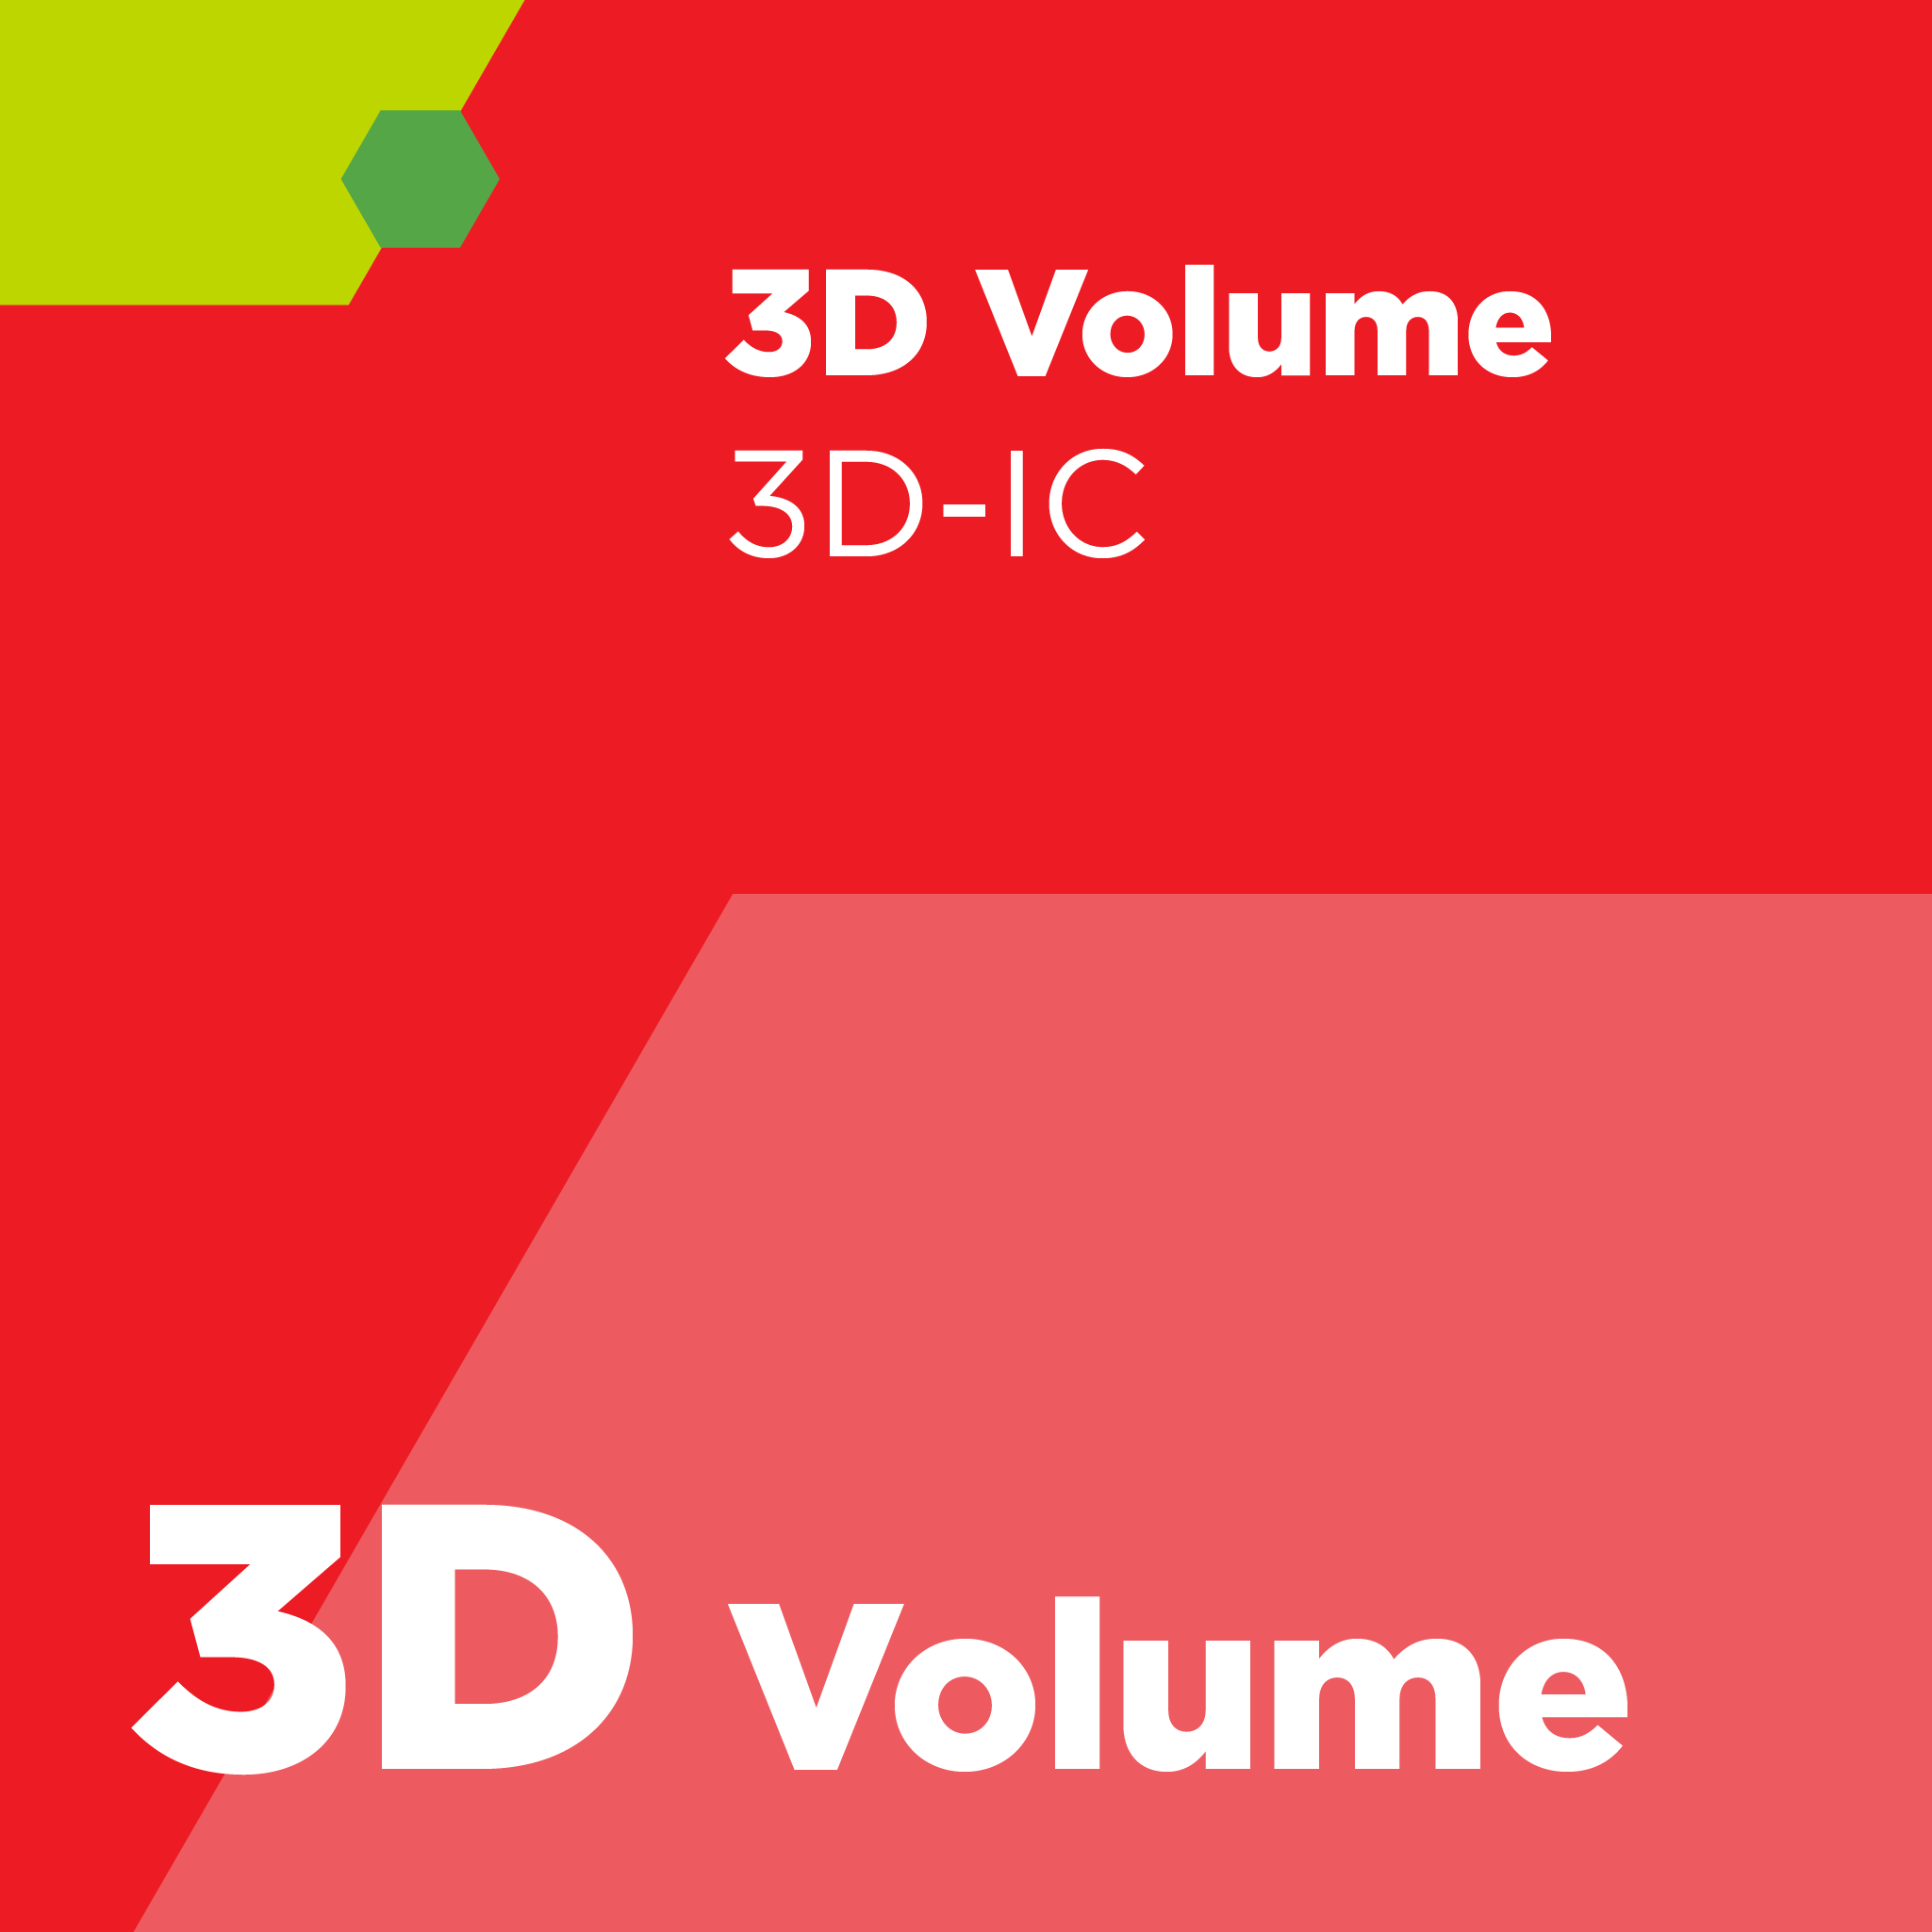 3D00100 - SEMI 3D1 - Terminology for Through Silicon via Geometrical Metrology